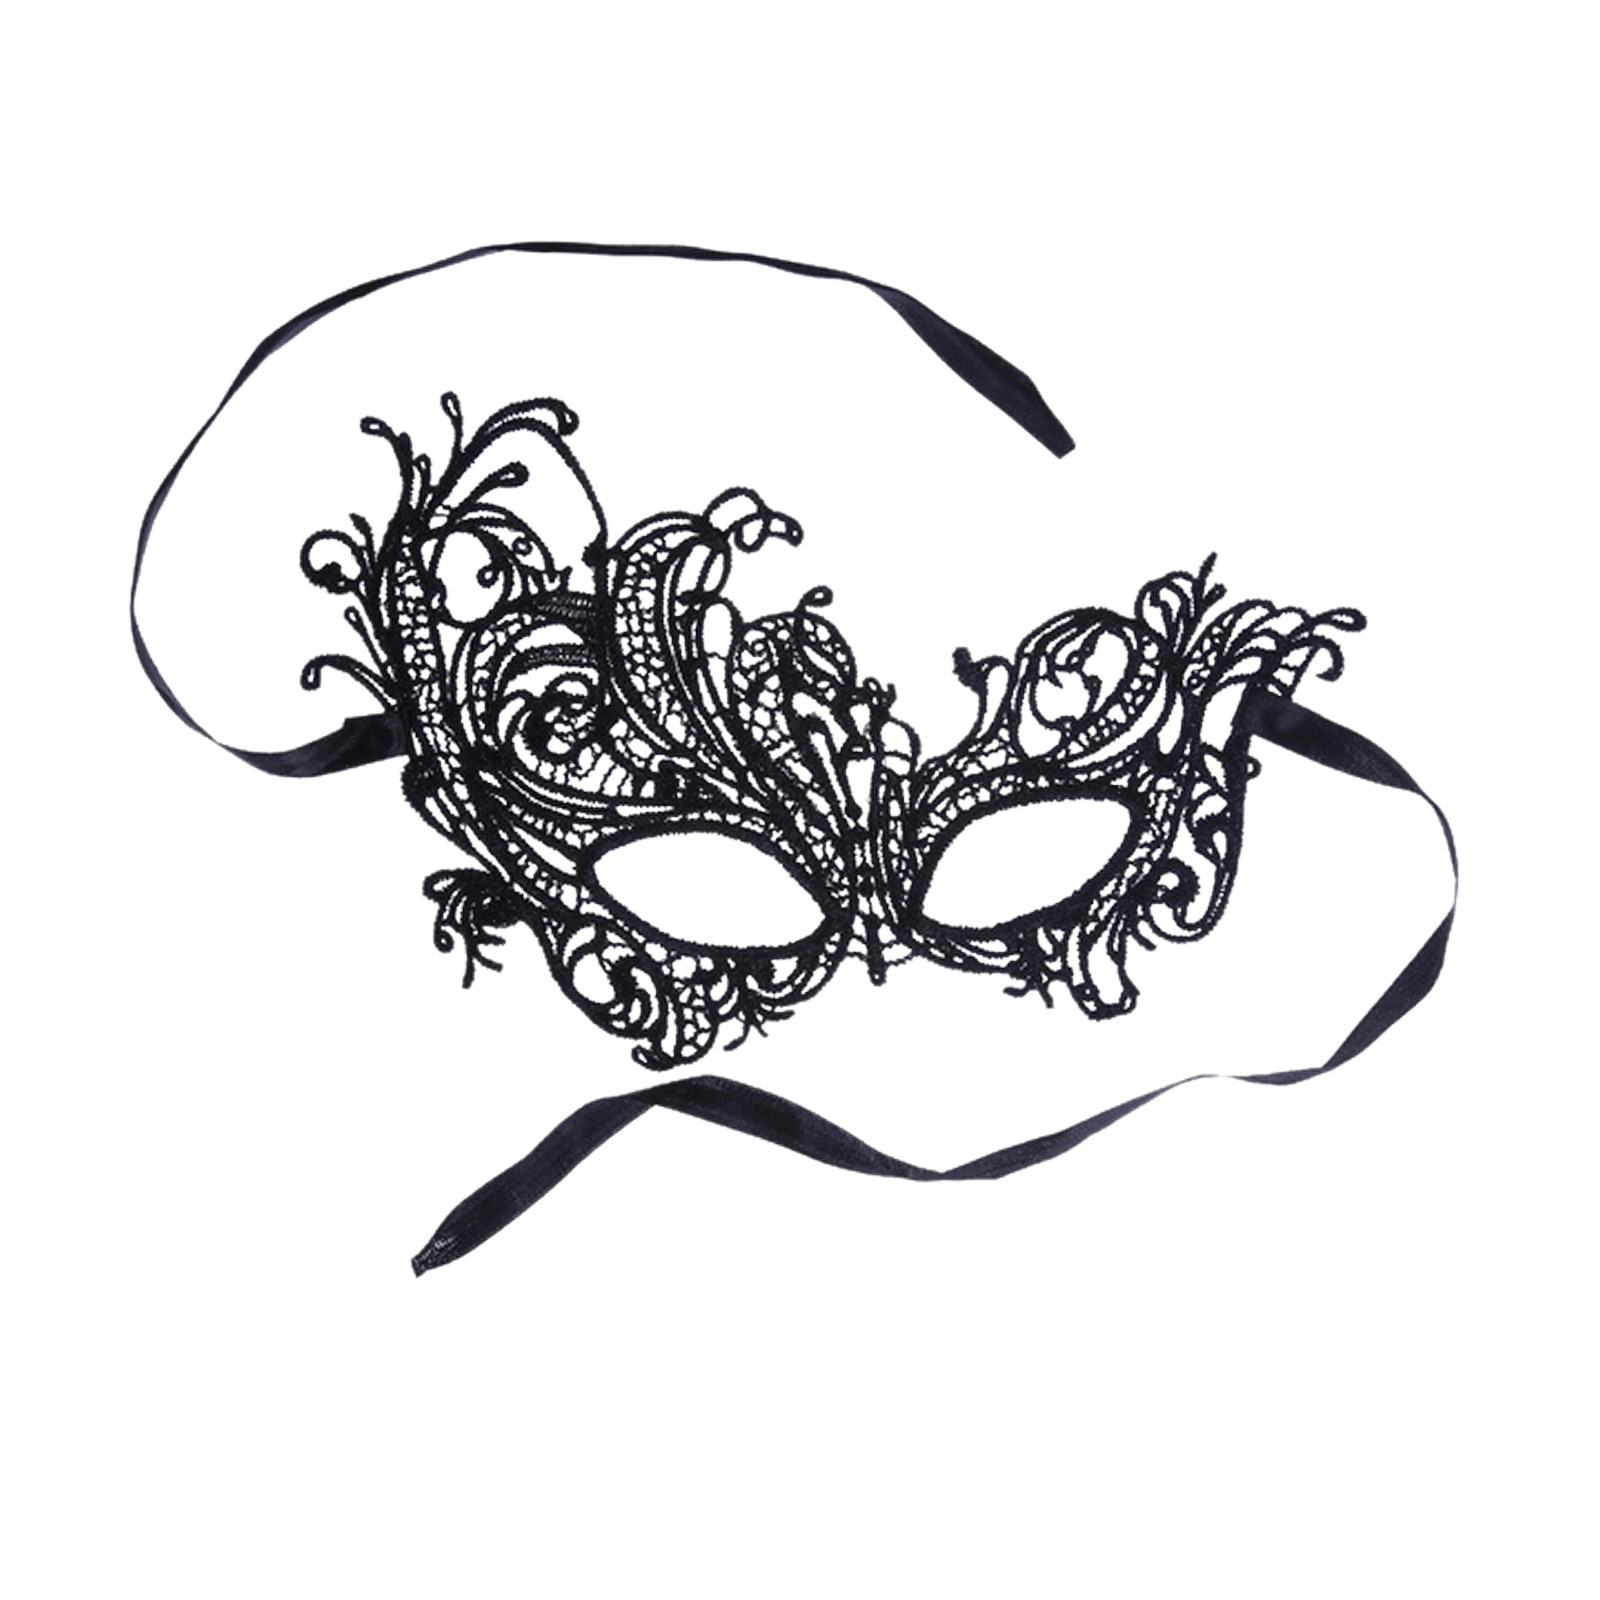 Черная маска на глаза. Кружевная маска. Карнавальная маска. Ажурные маски для карнавала. Женские маски для маскарада.